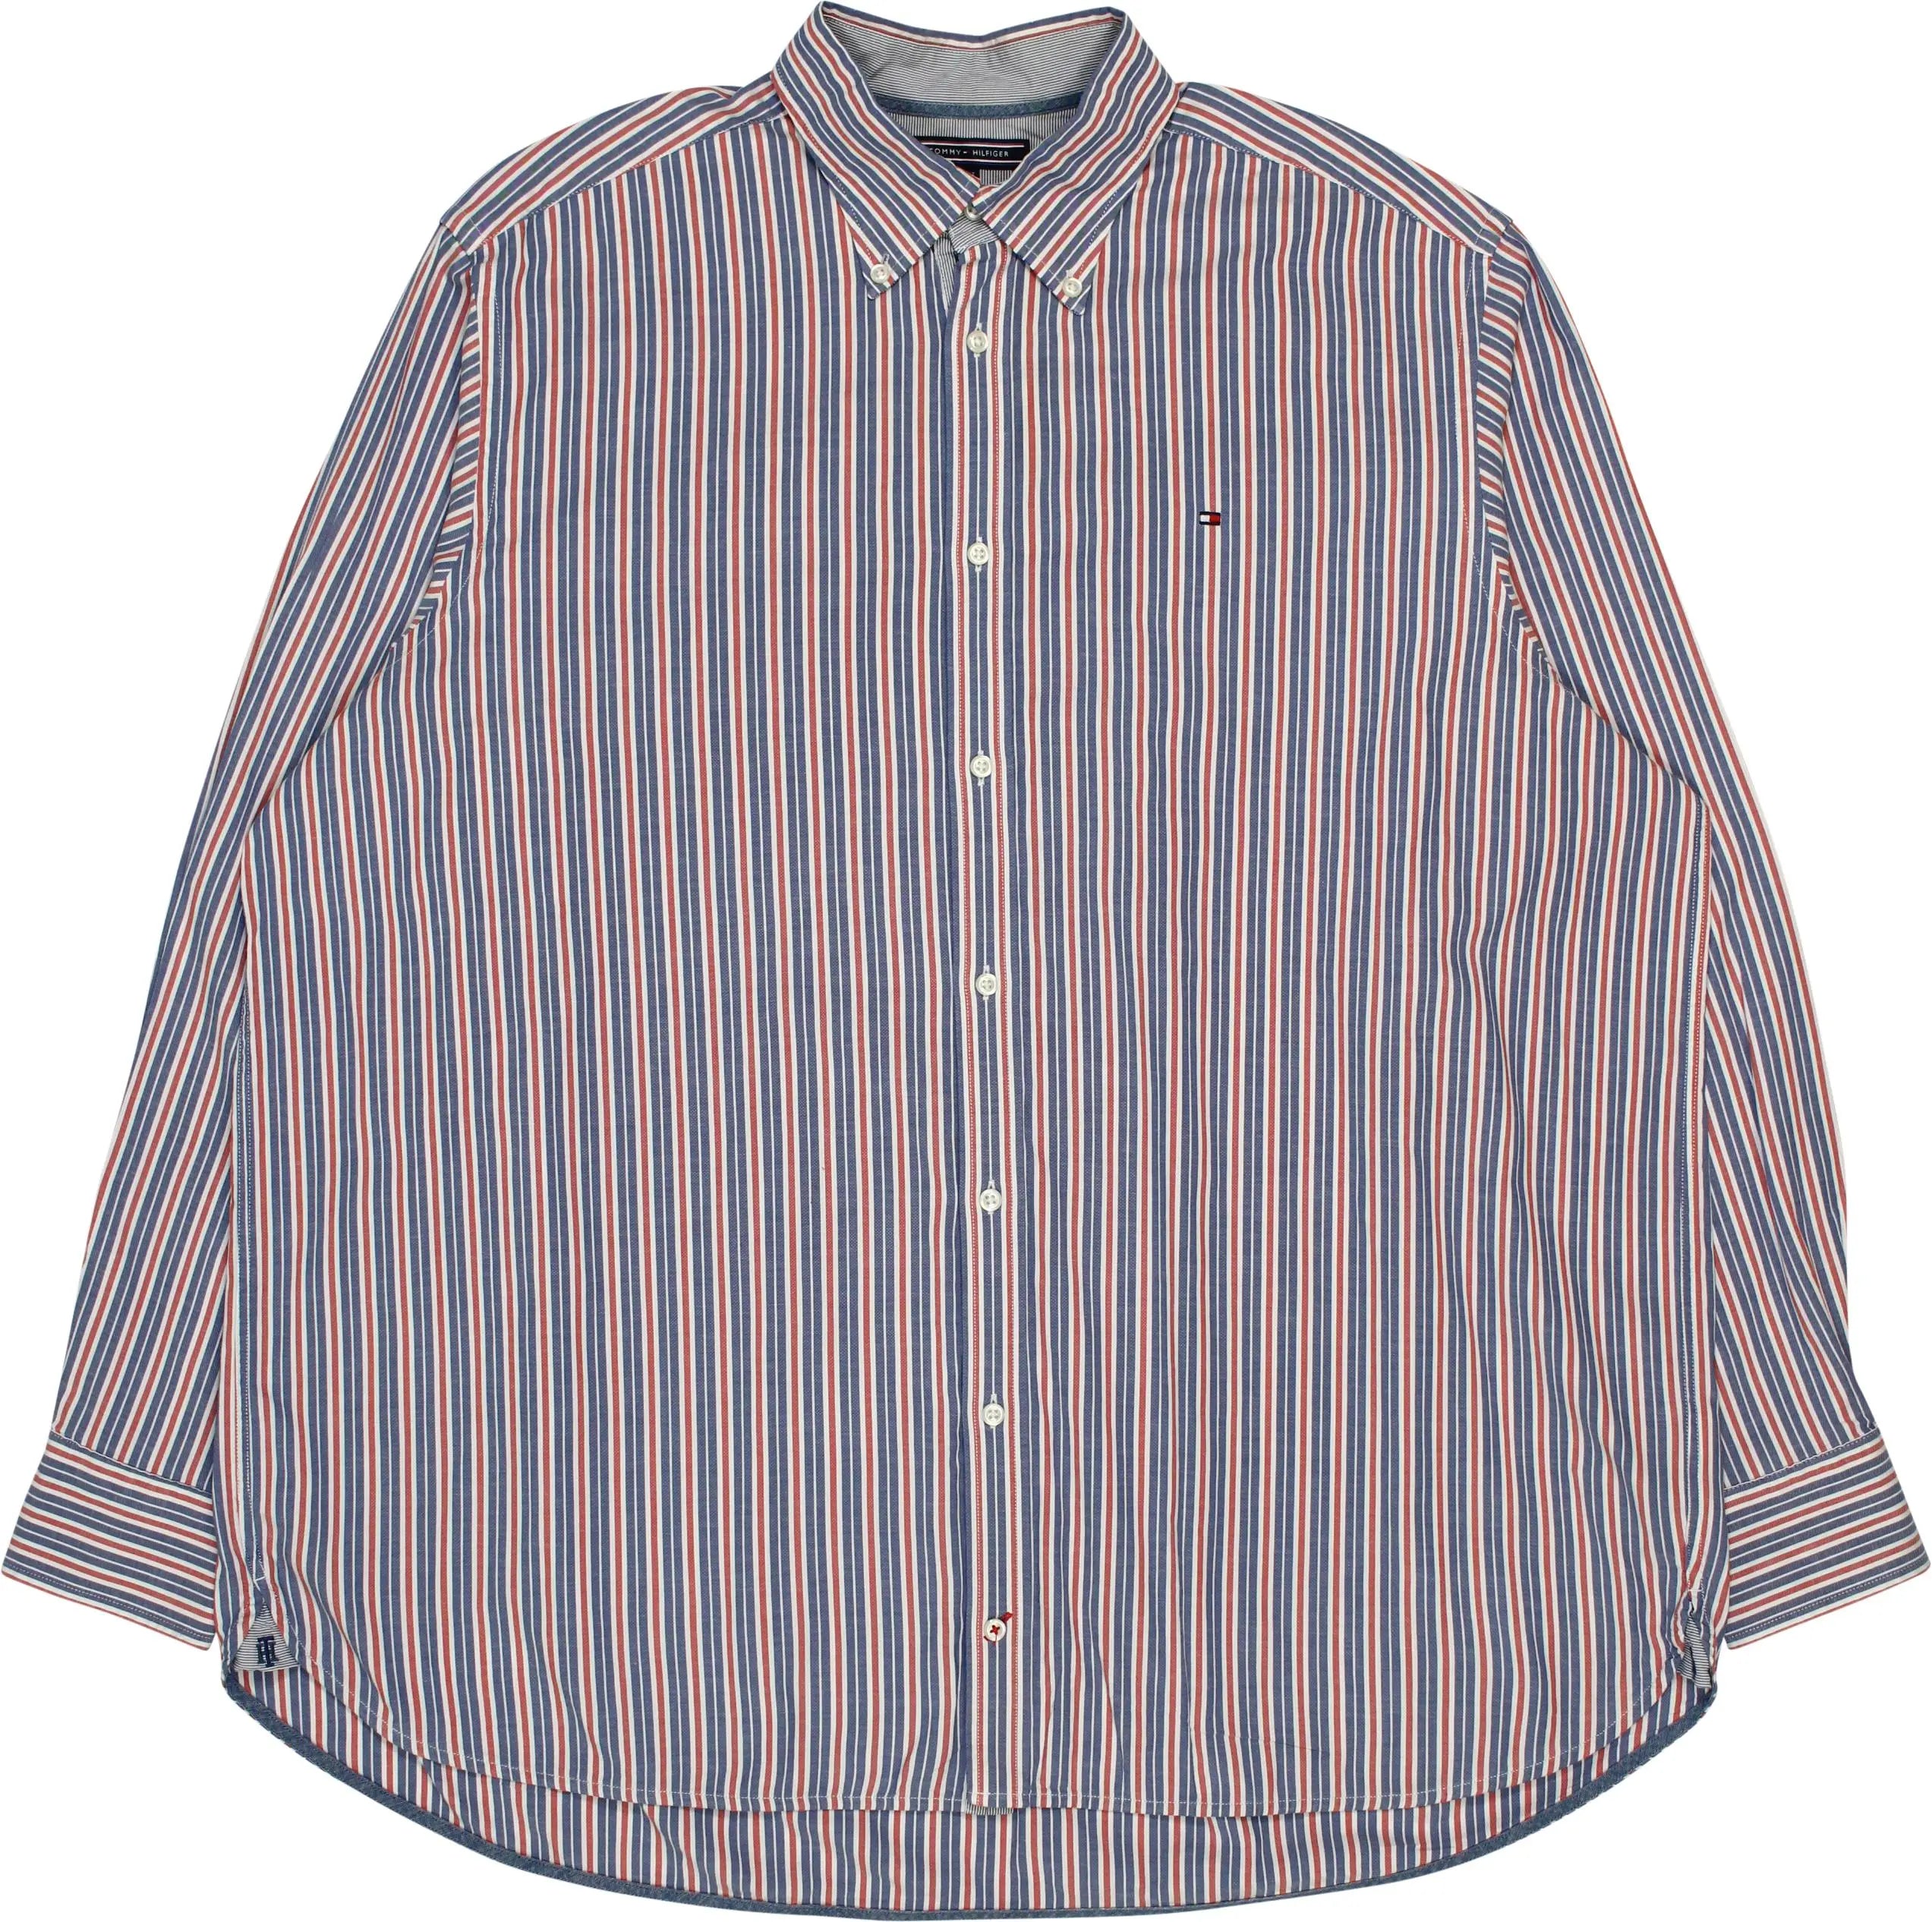 Tommy Hilfiger - Tommy Hilfiger Striped Shirt- ThriftTale.com - Vintage and second handclothing